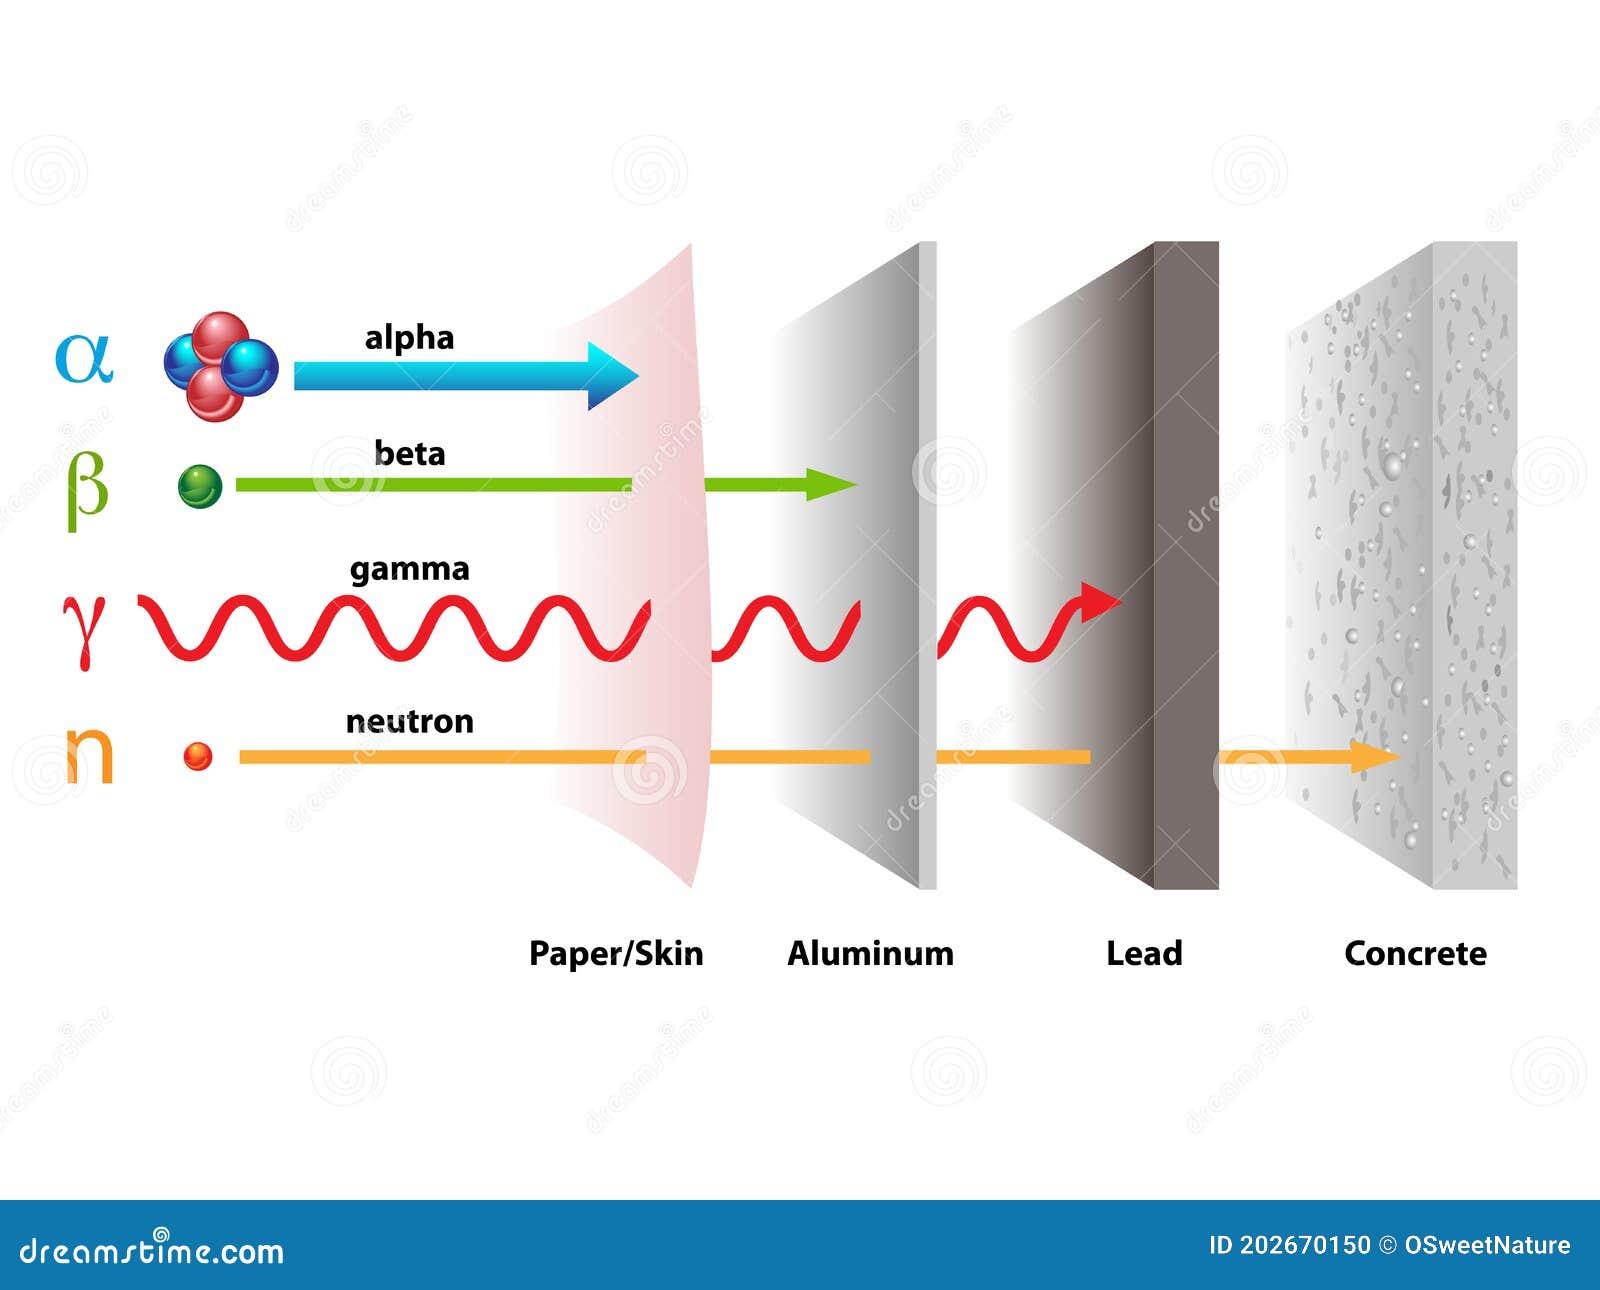 alpha, beta, gamma radiation through surfaces